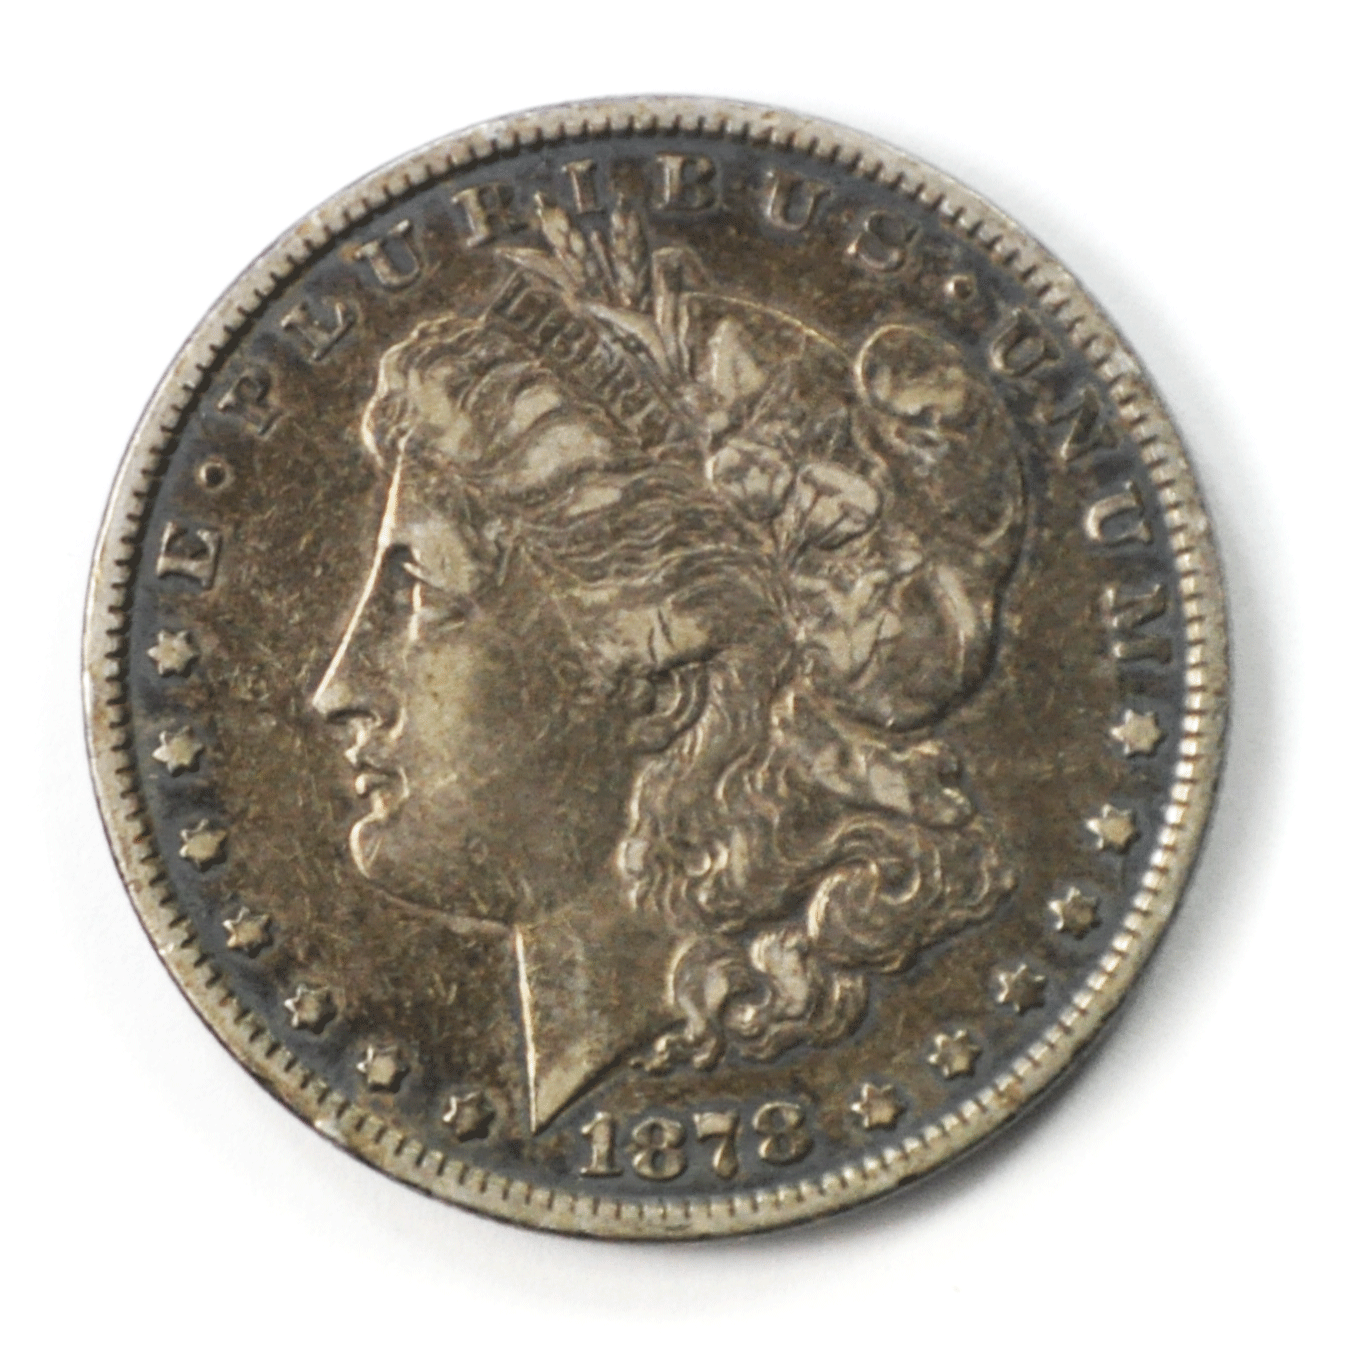 1878 7TF 78 Rev $1 Morgan Silver One Dollar VAM 113 Philadelphia Flake on Cheek